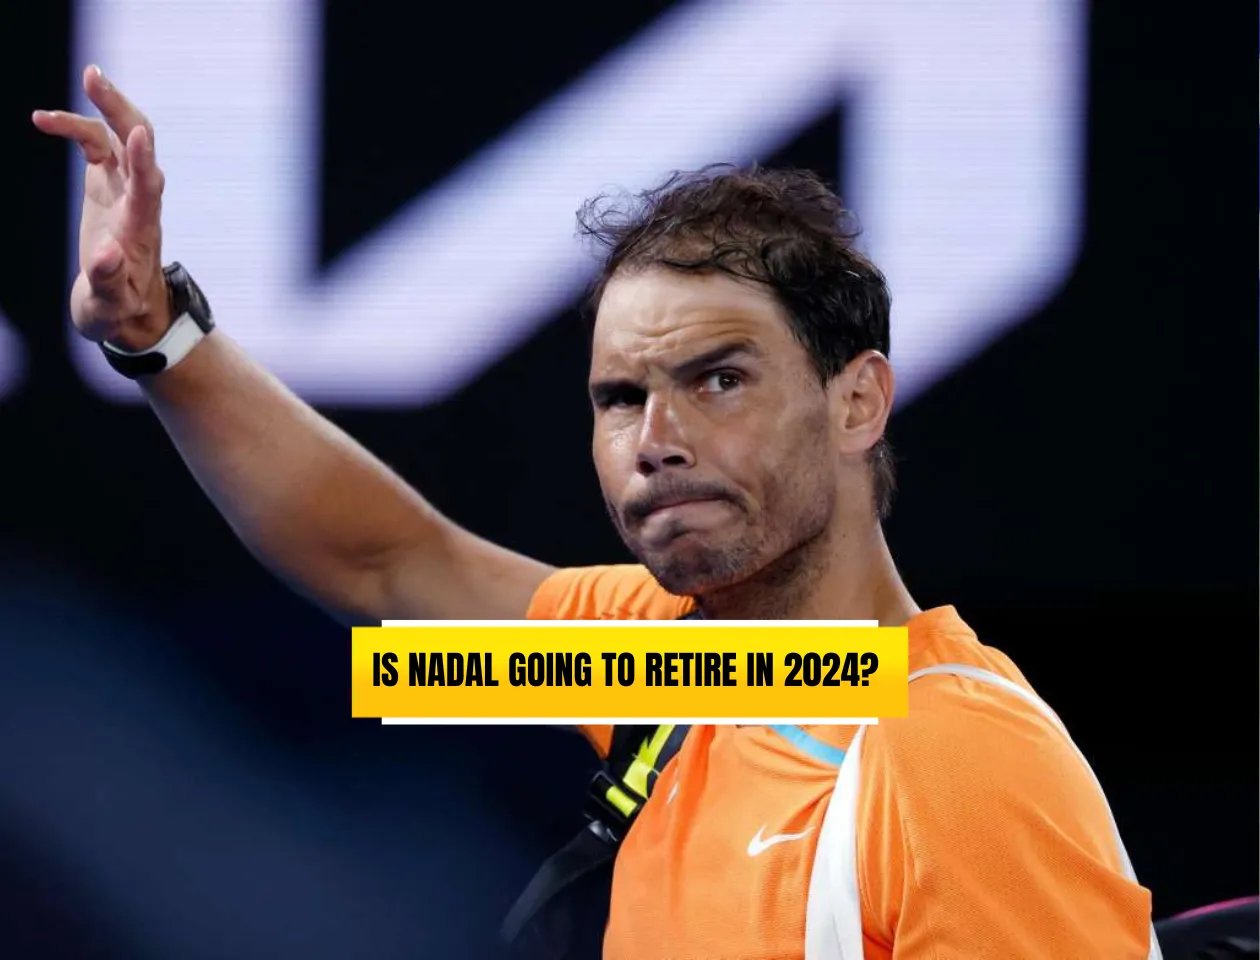 'It will be my last year...' - Tennis superstar Rafael Nadal speaks about his retirement plans ahead of  ATP 250 in Brisbane